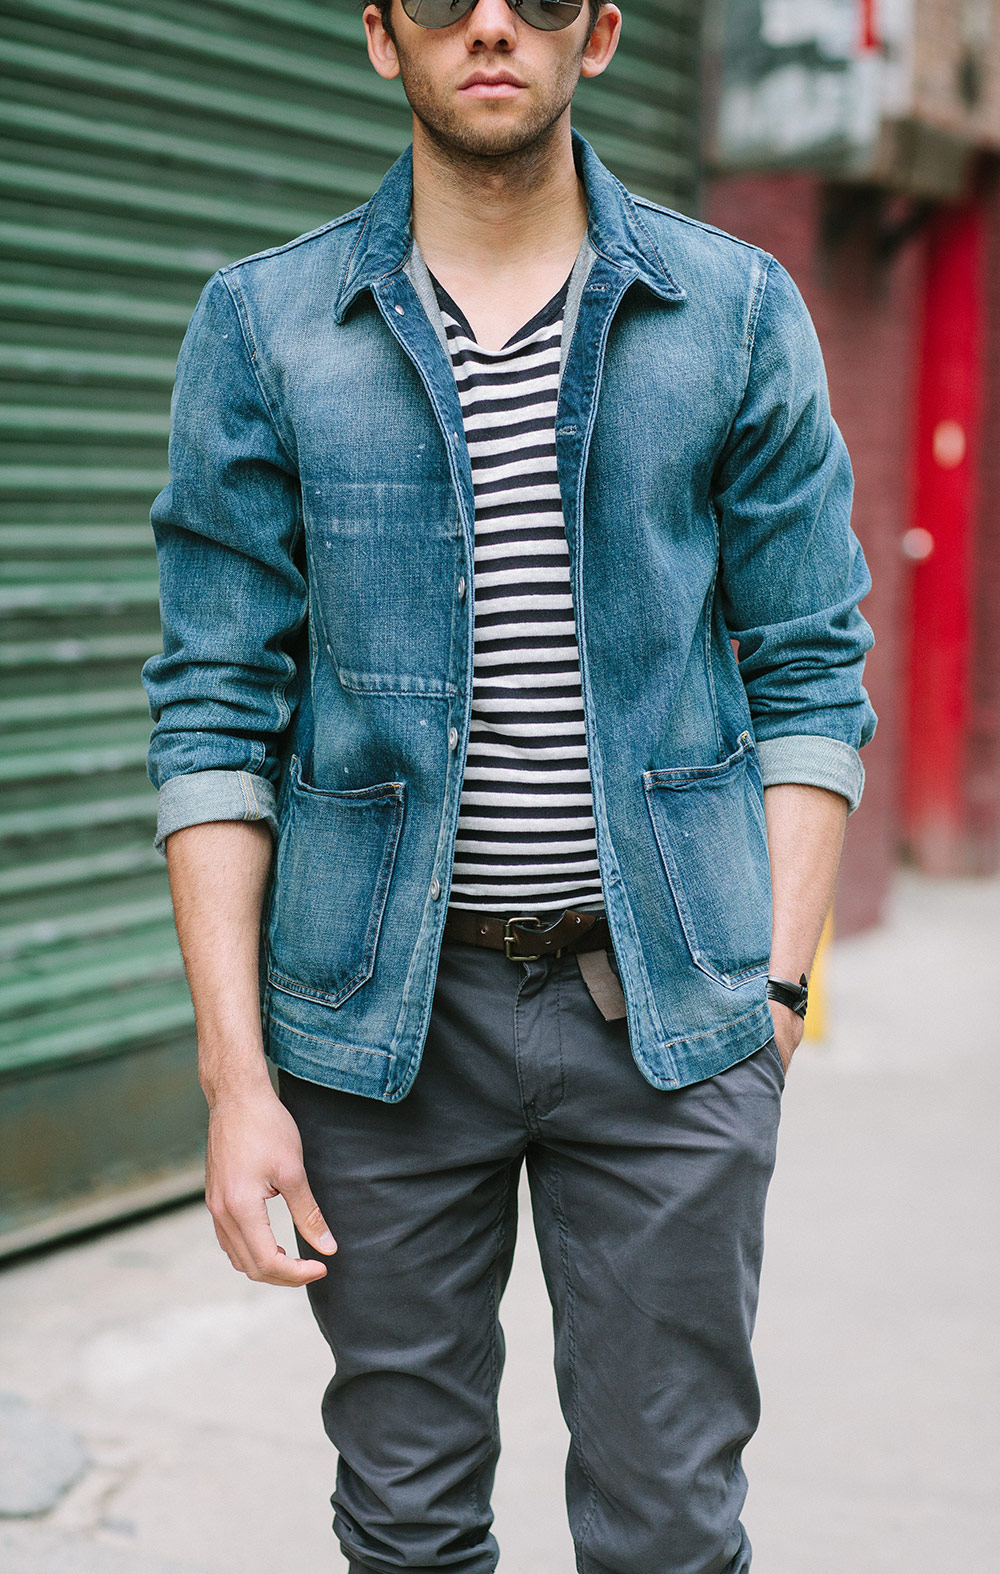 talun-zeitoun-denim-jacket-striped-tee-spring-menswear-look-6